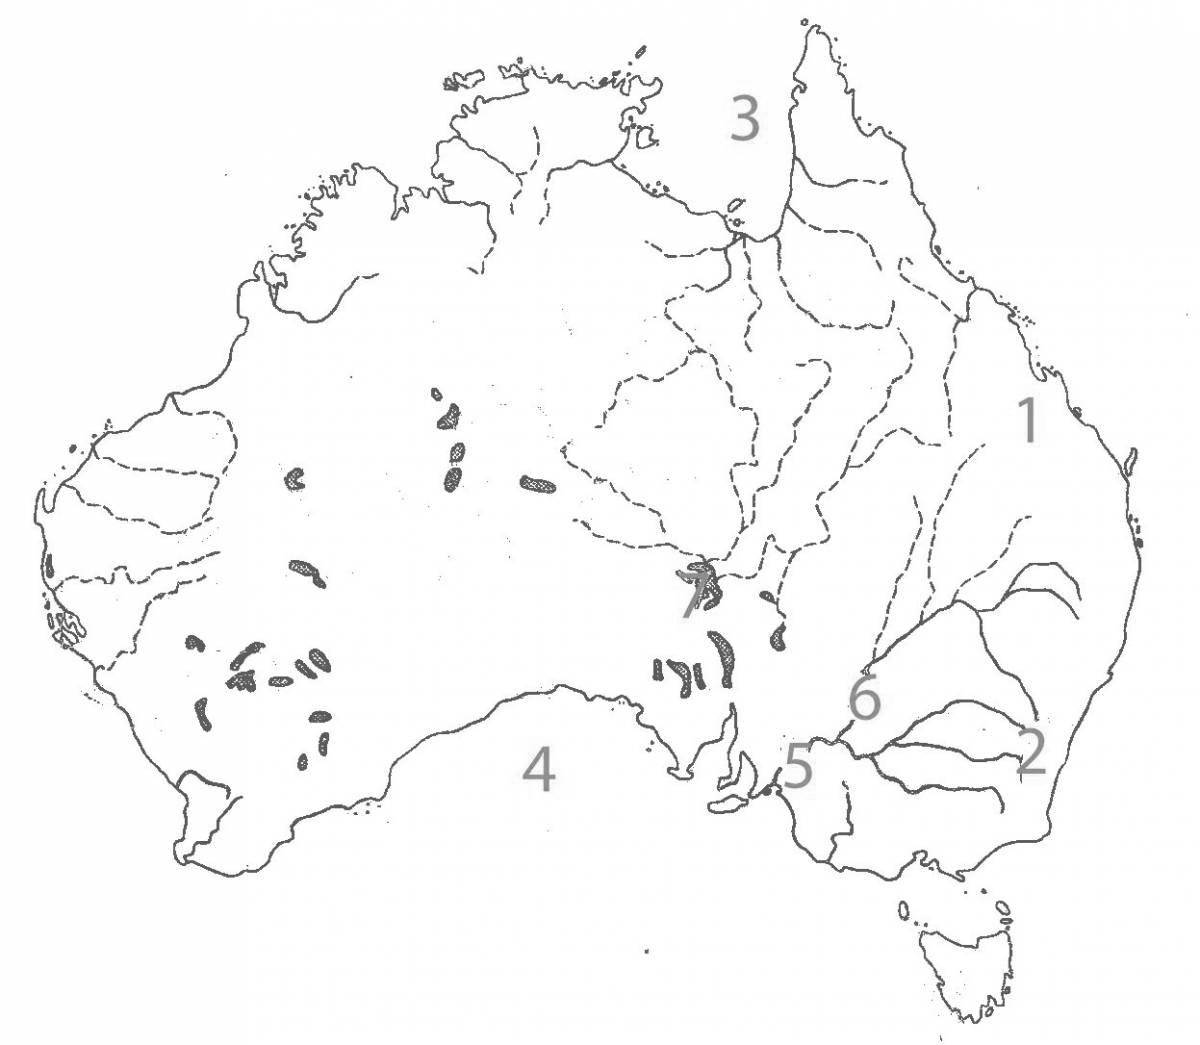 Impressive coloring of mainland australia